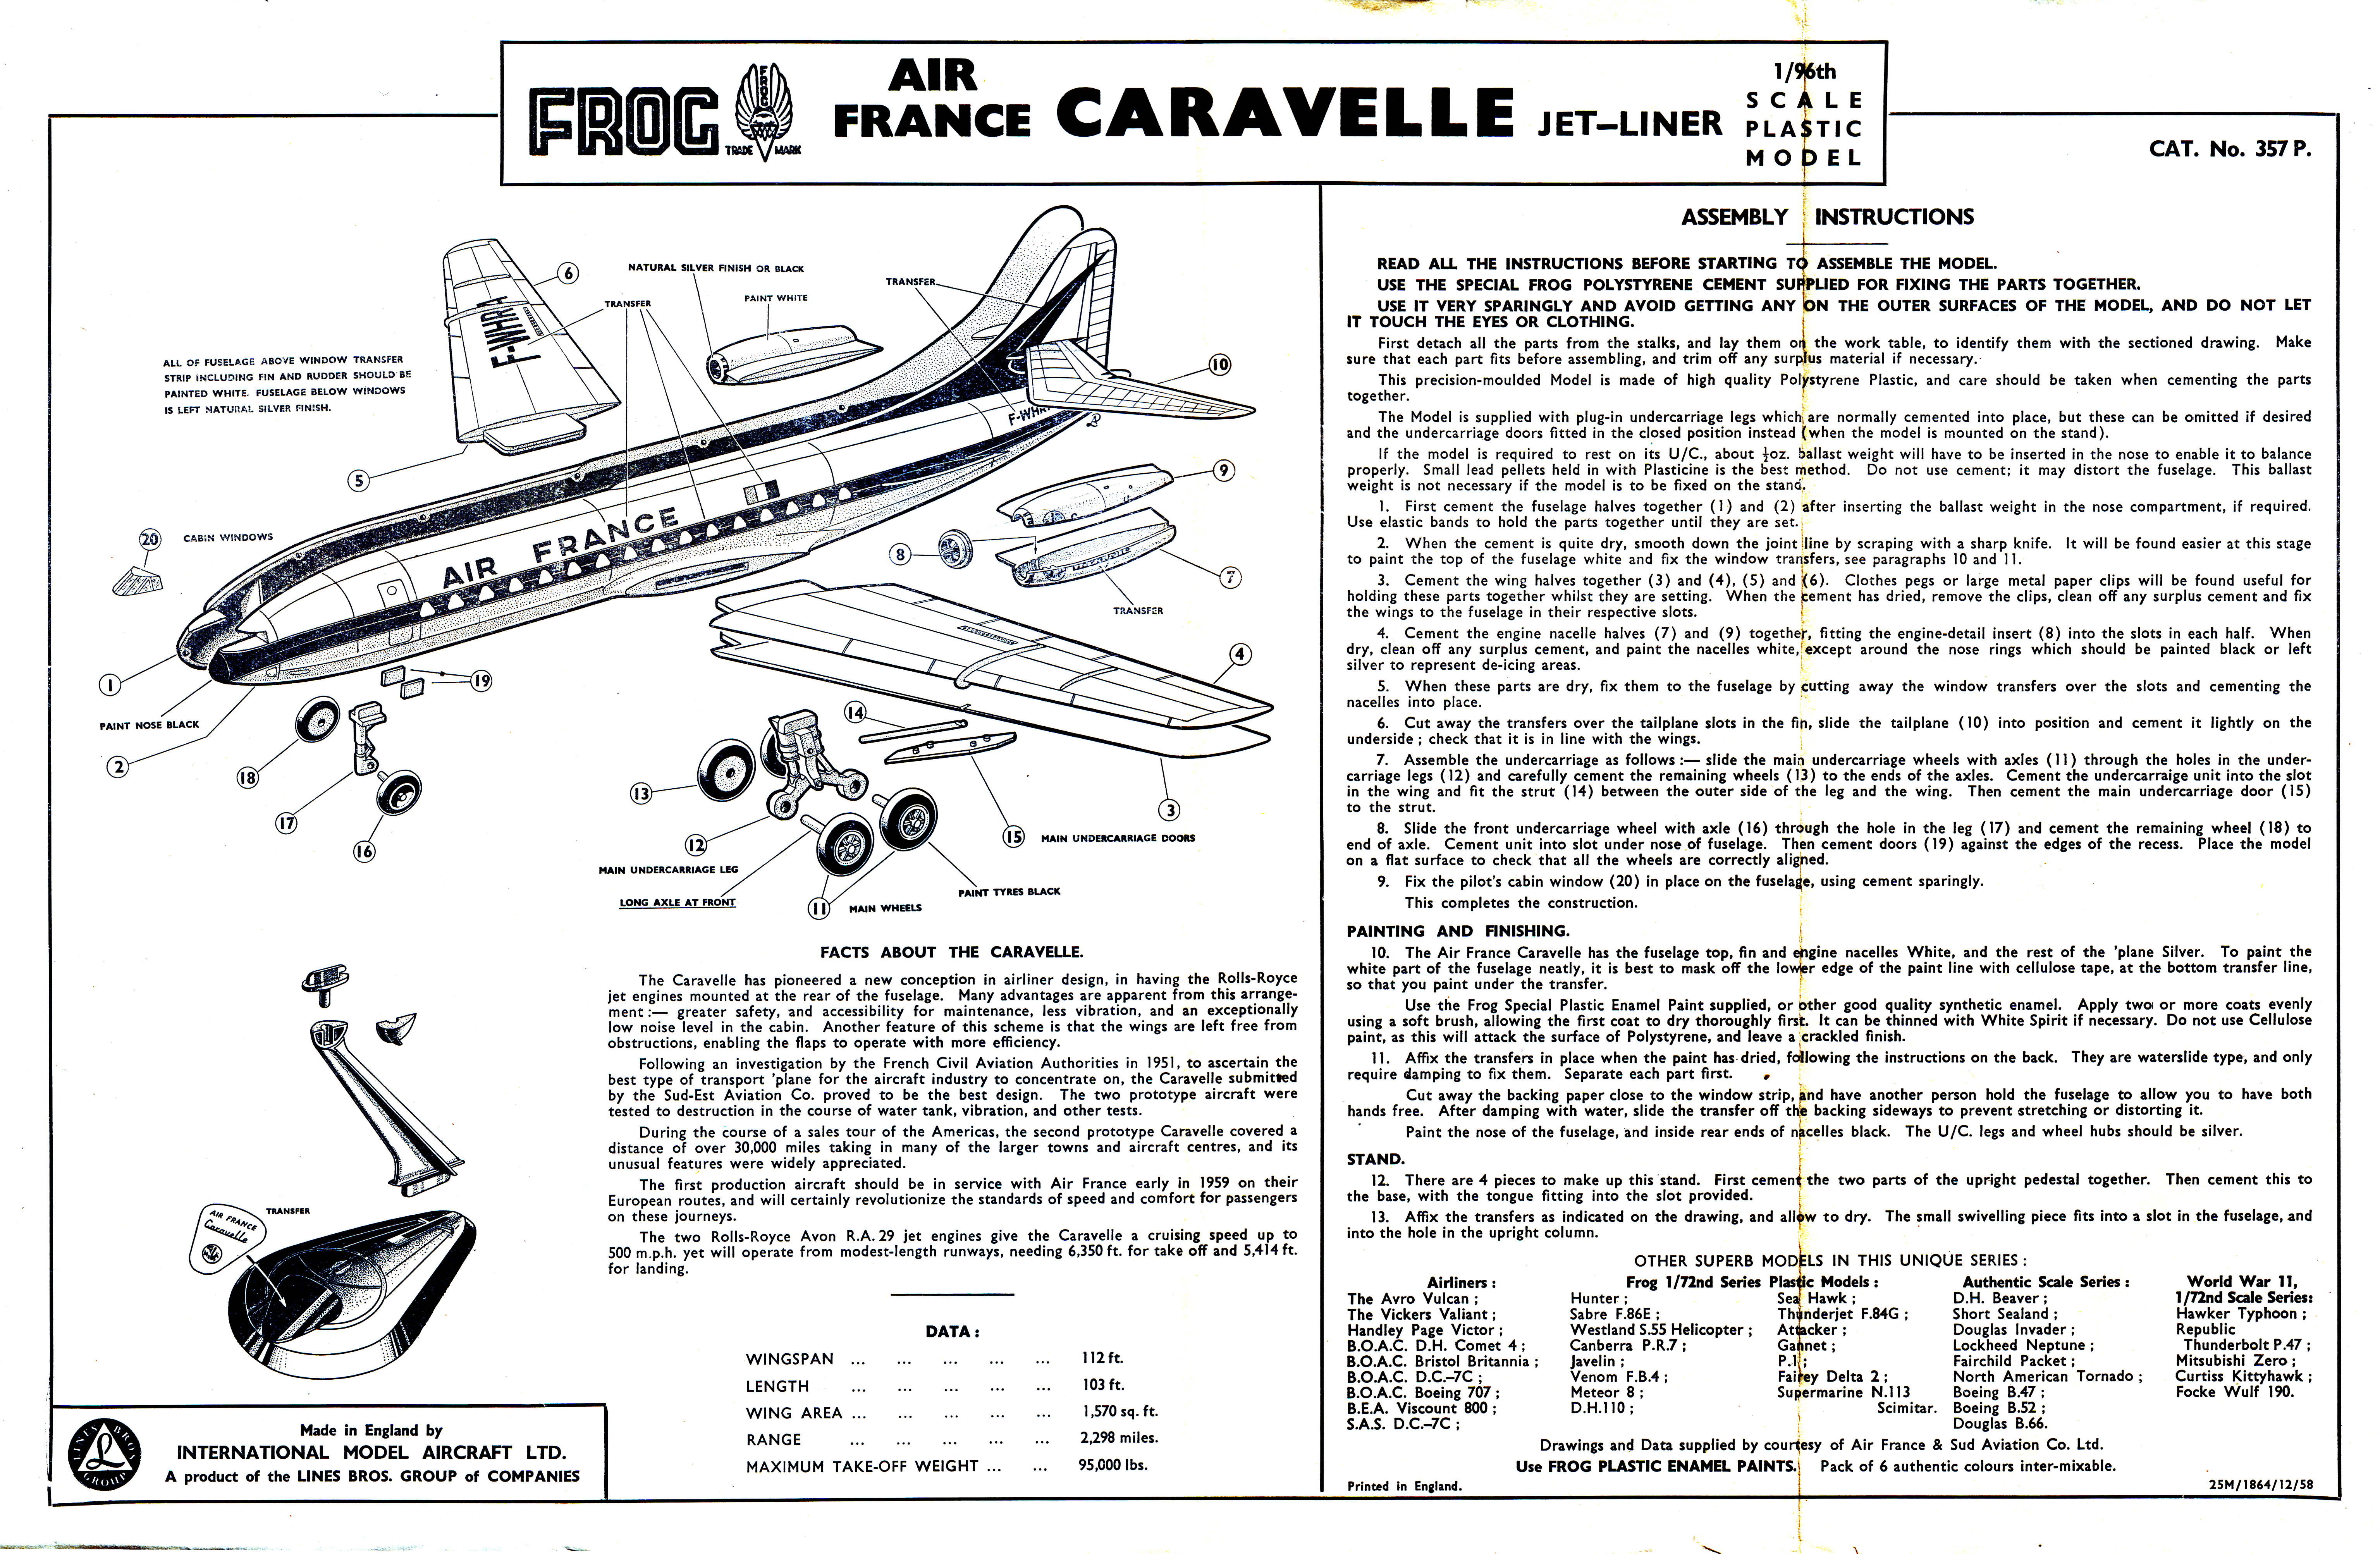 Инструкция IMA FROG 357P The Air France Caravelle, 1959